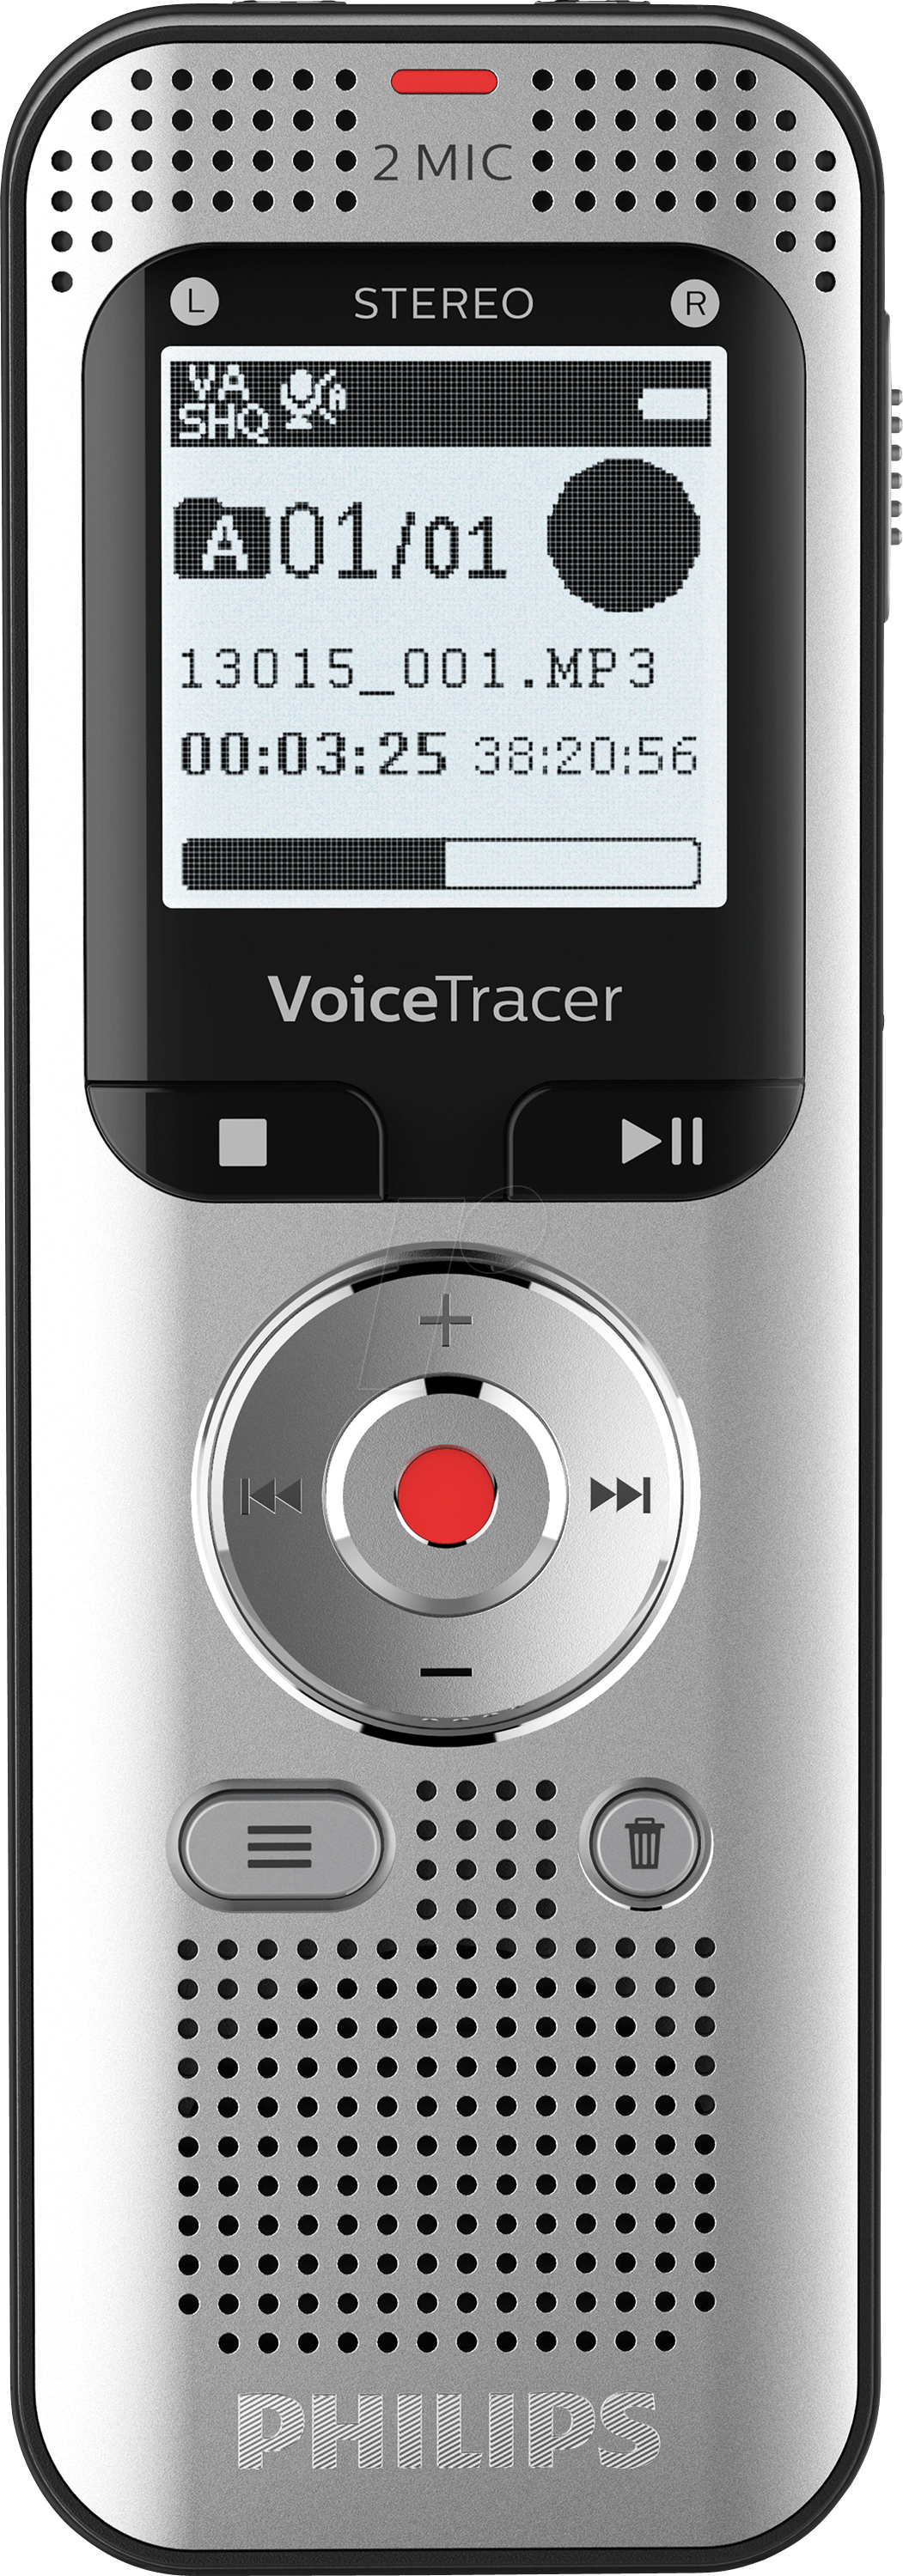 PHILIPS DVT2050 - VoiceTracer Audiorecorder von Philips